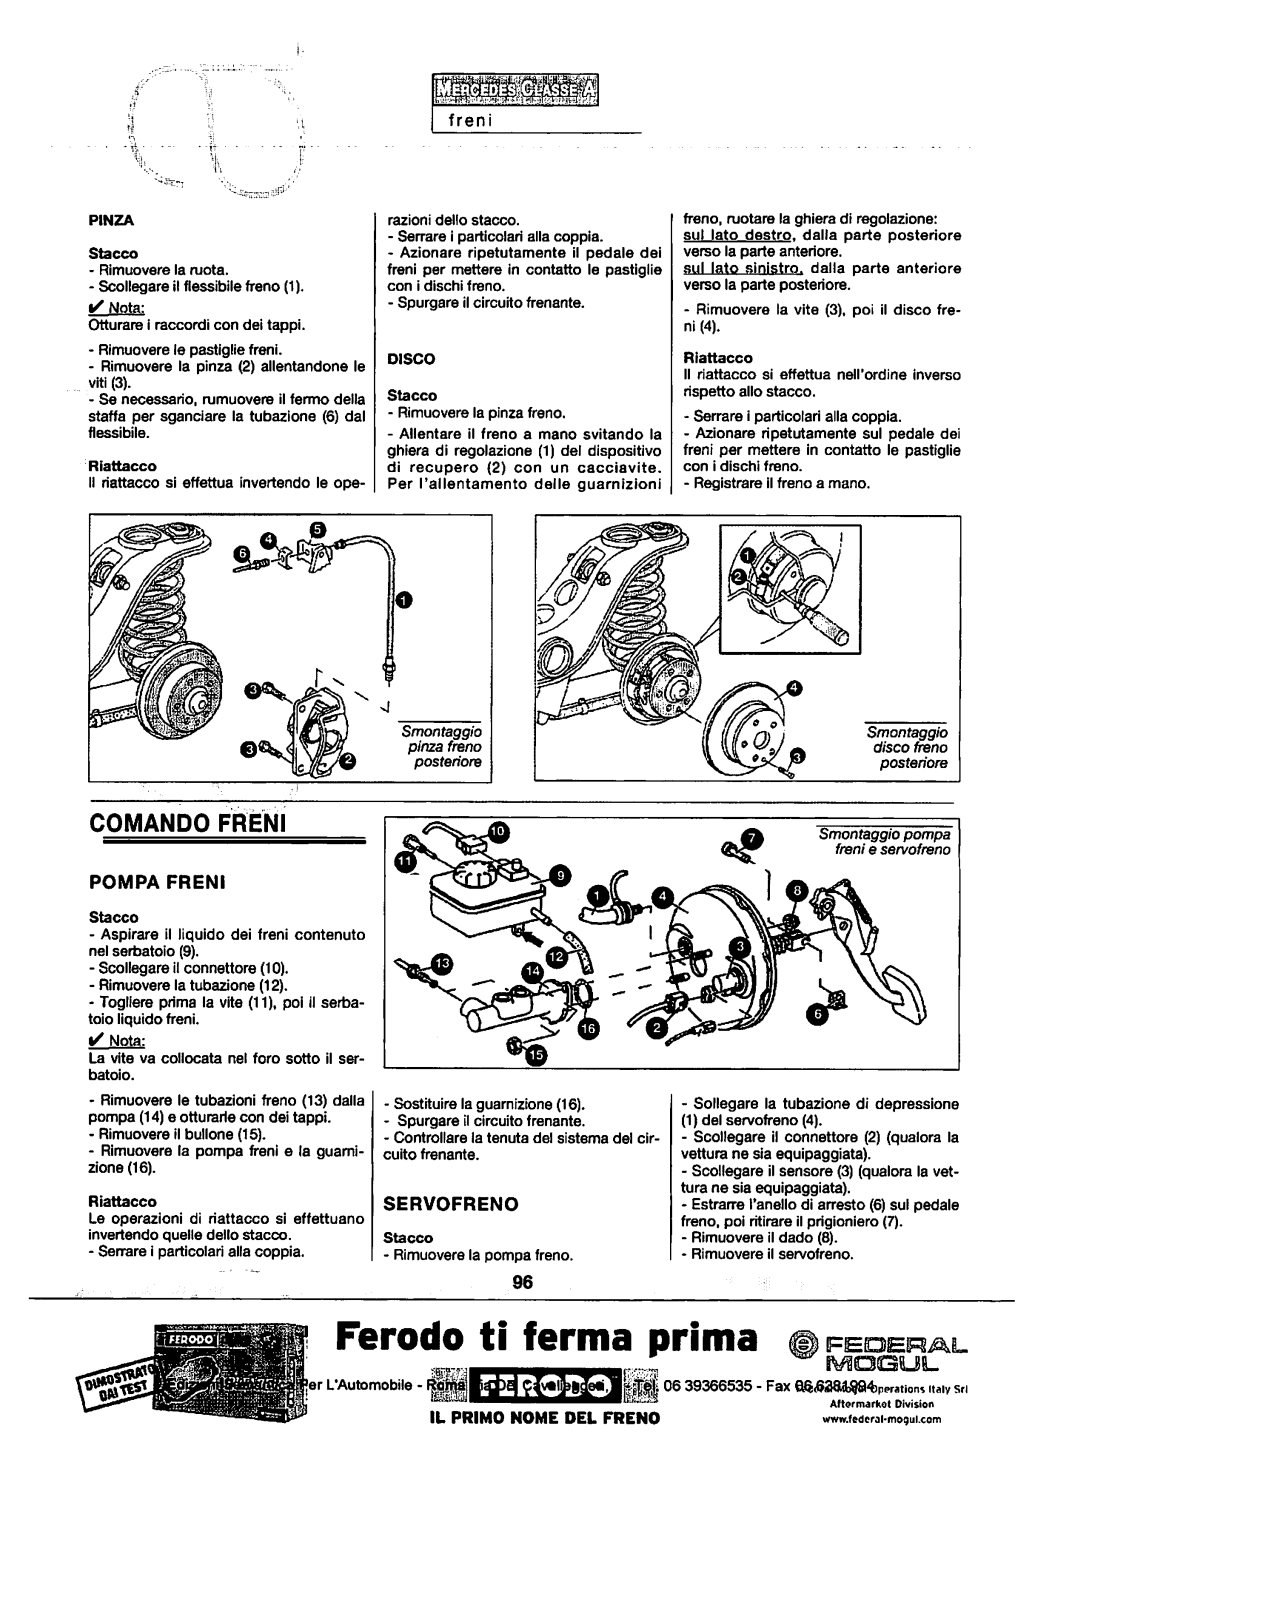 w168 - (W168): Manual técnico - tudo sobre - 1997 a 2004 - italiano 29oshm9